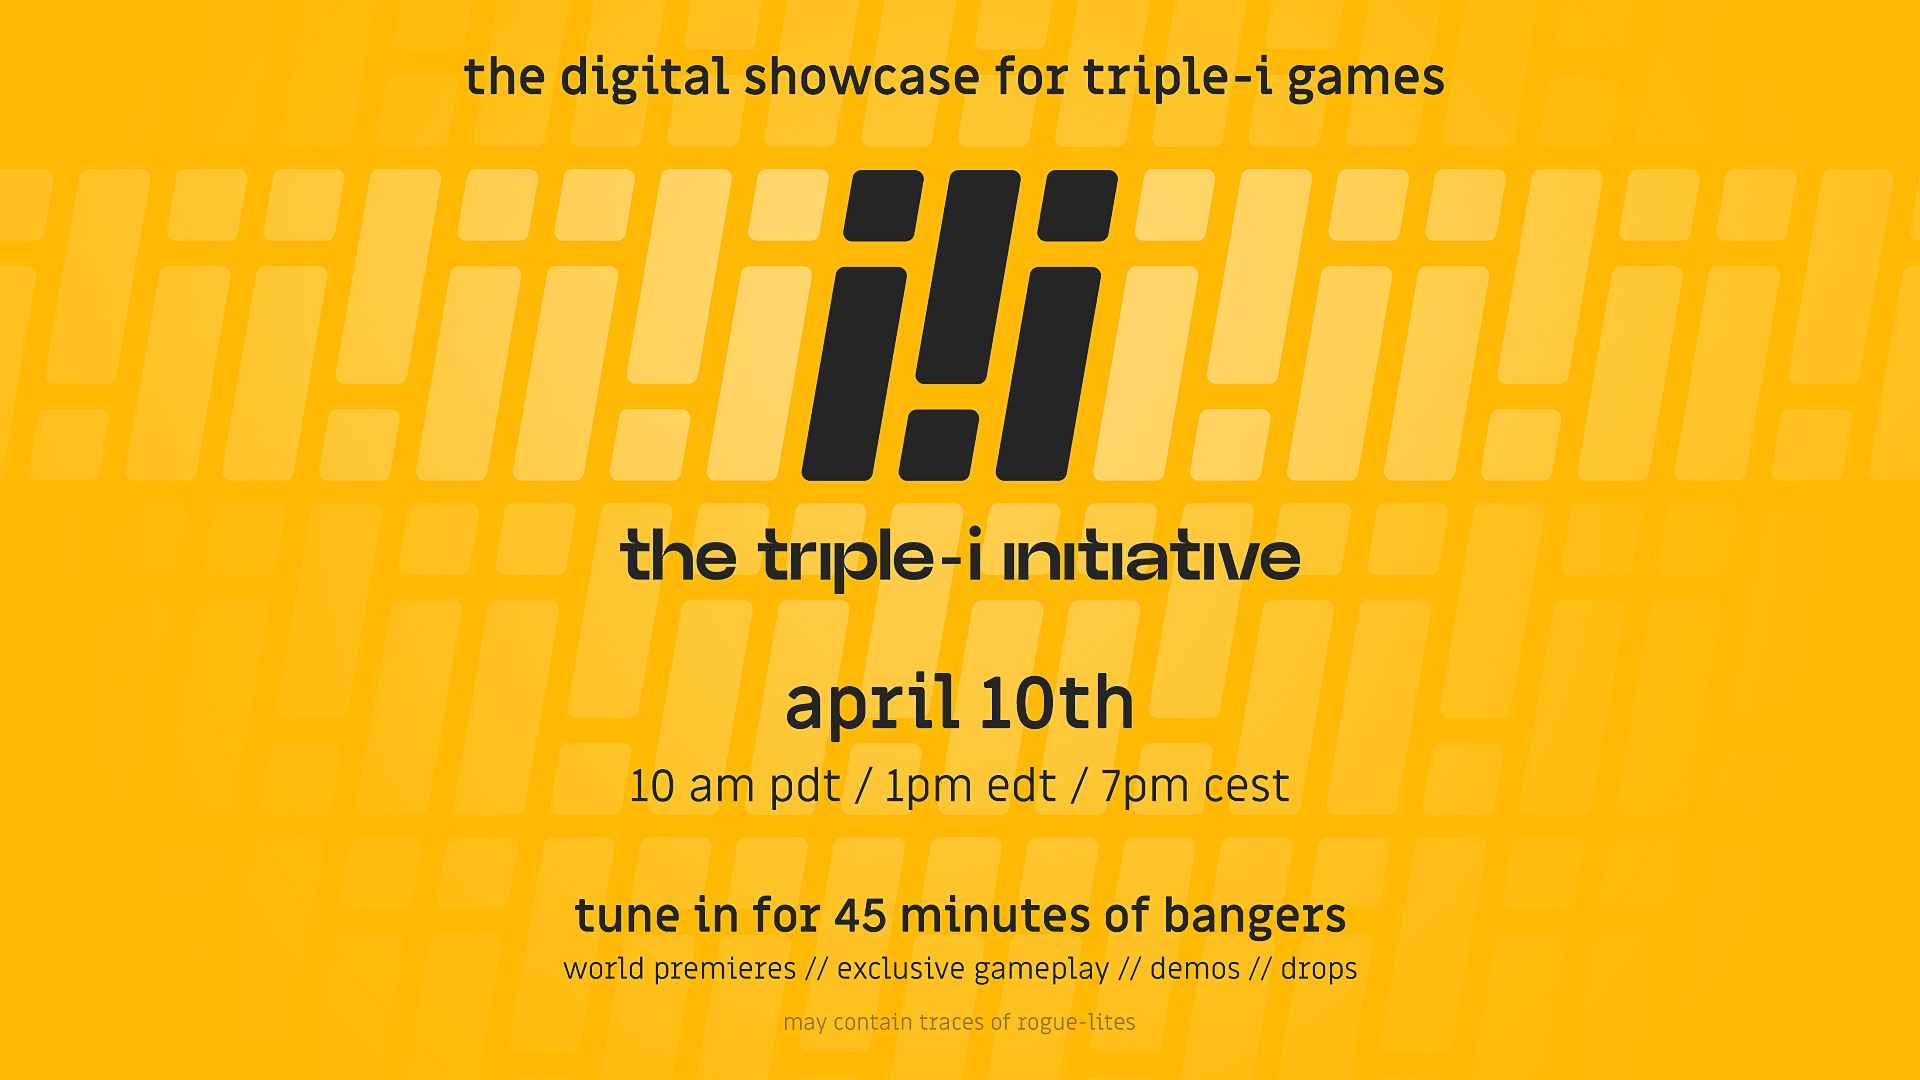 Triple-iii Initiative Showcase announced